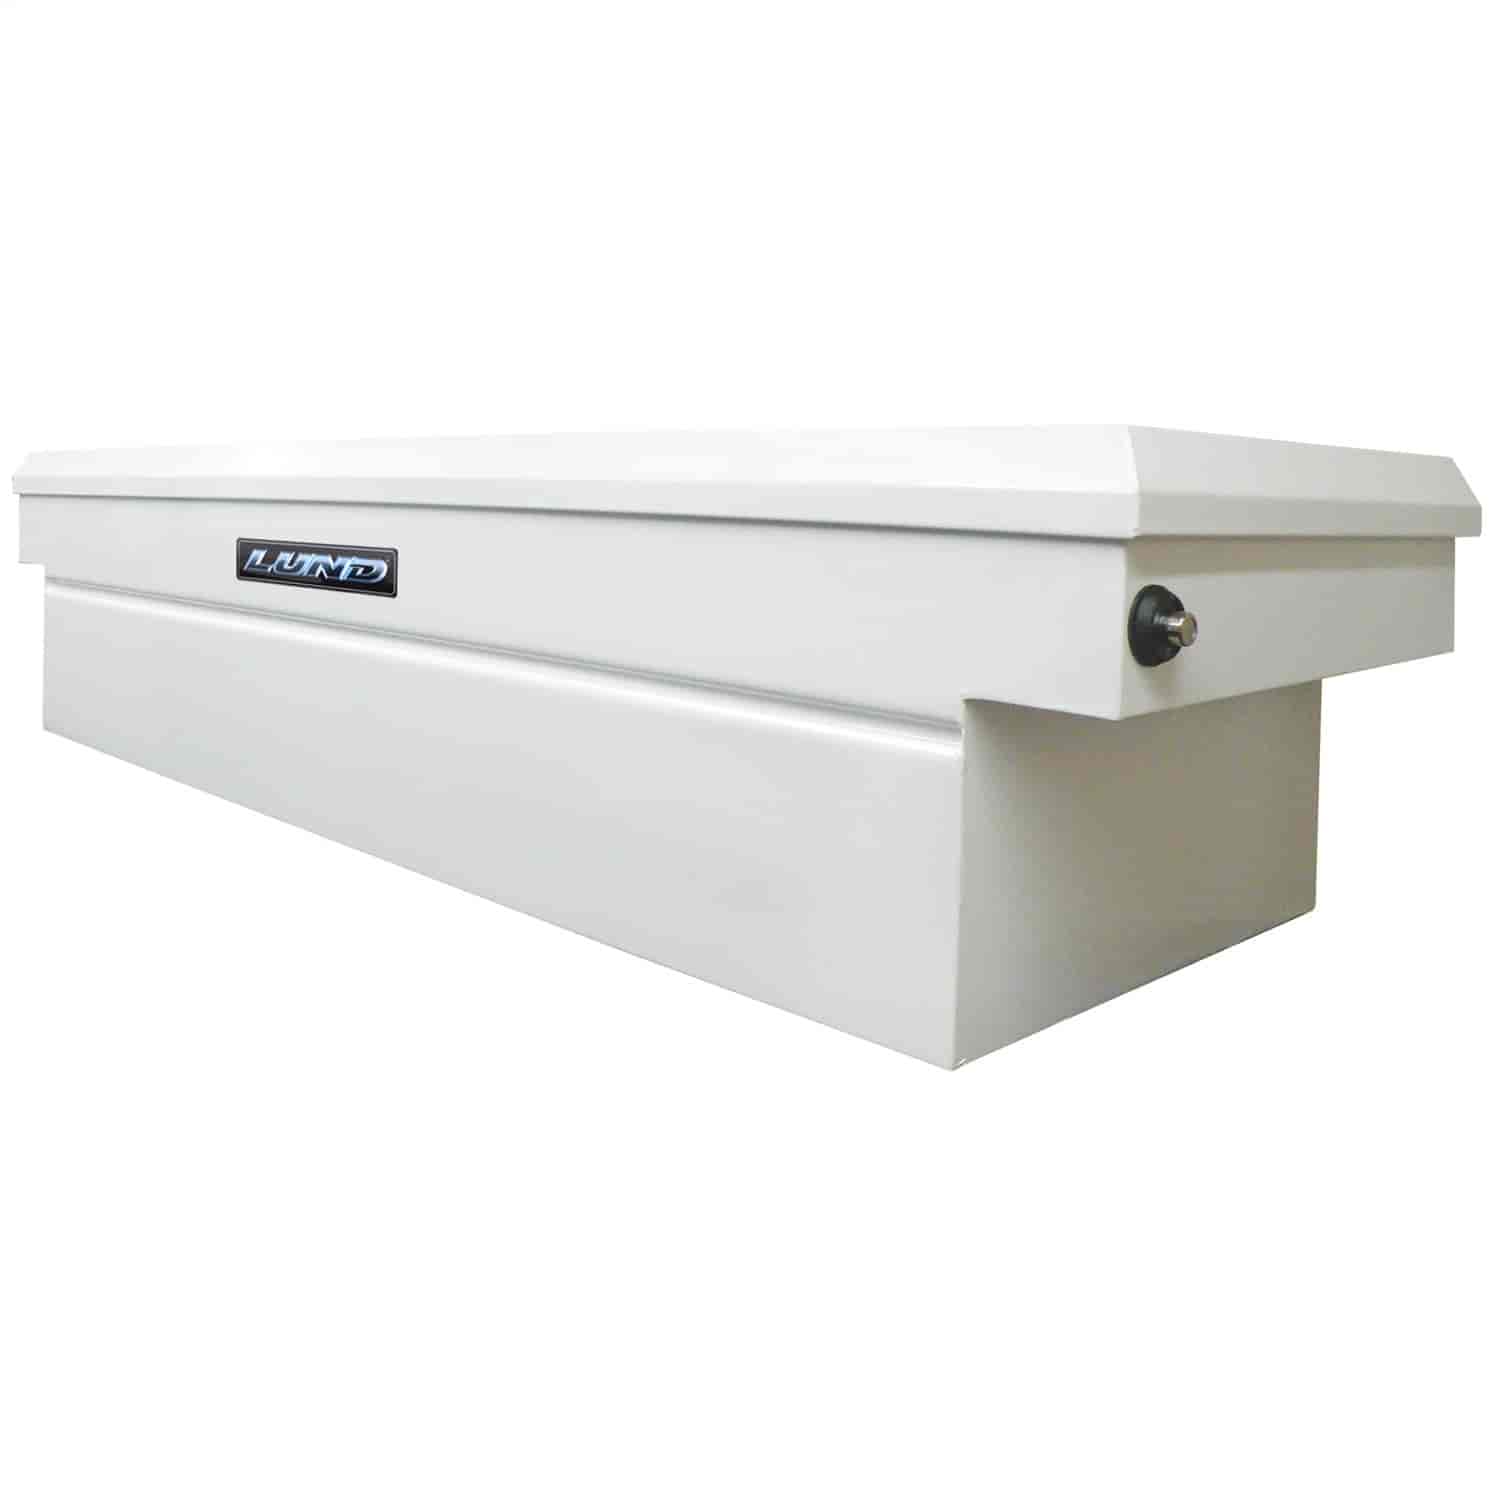 PRO HD Steel Cross Bed Tool Box Length: 70.25"